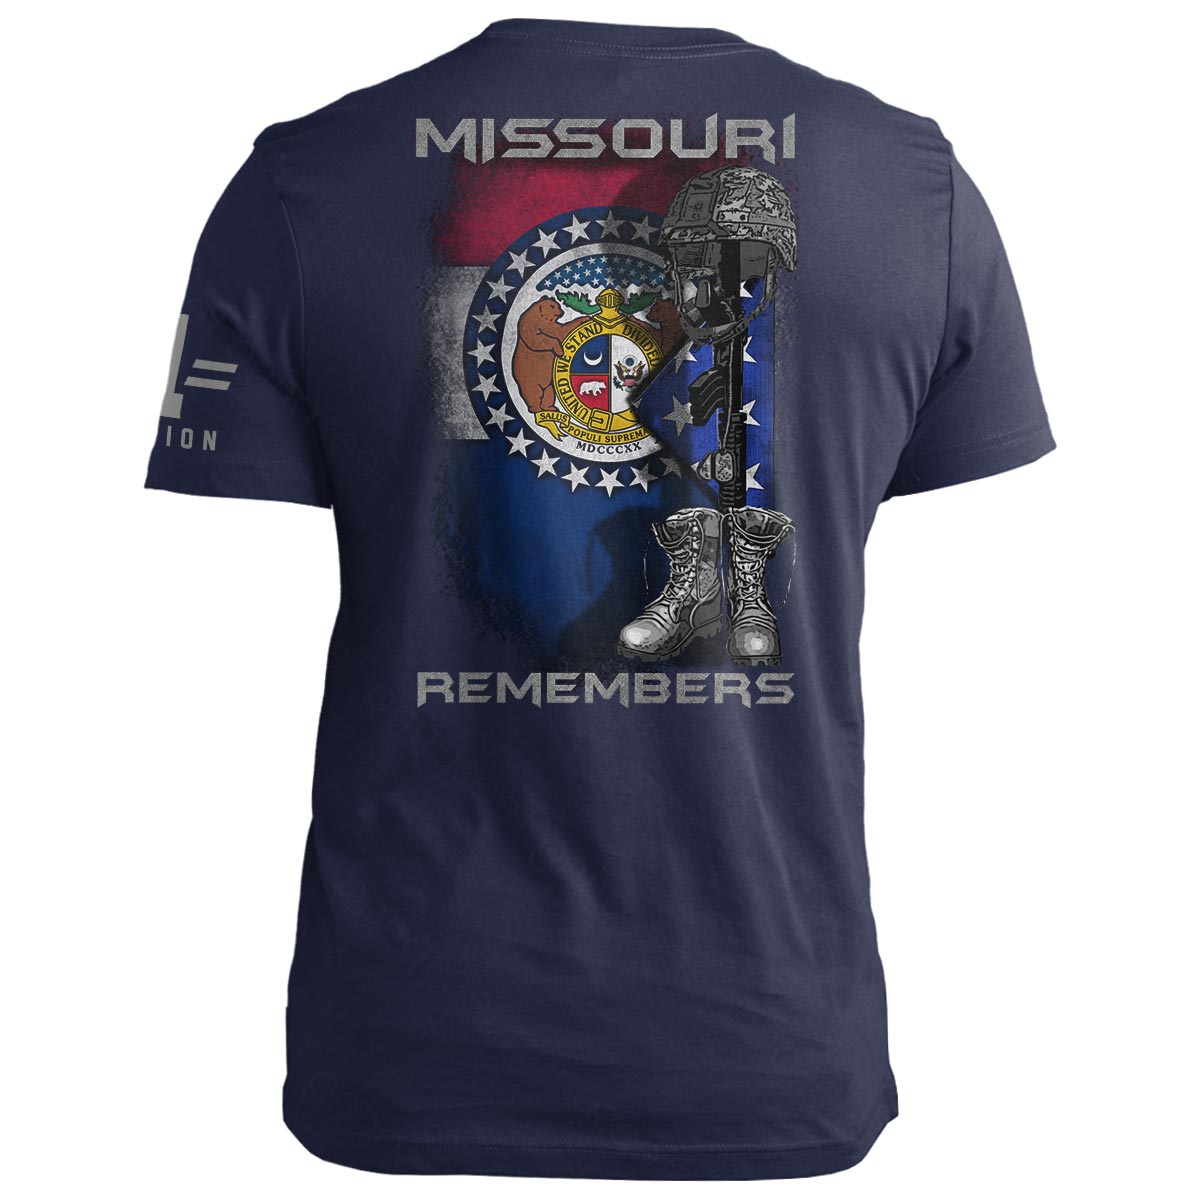 Missouri Remembers